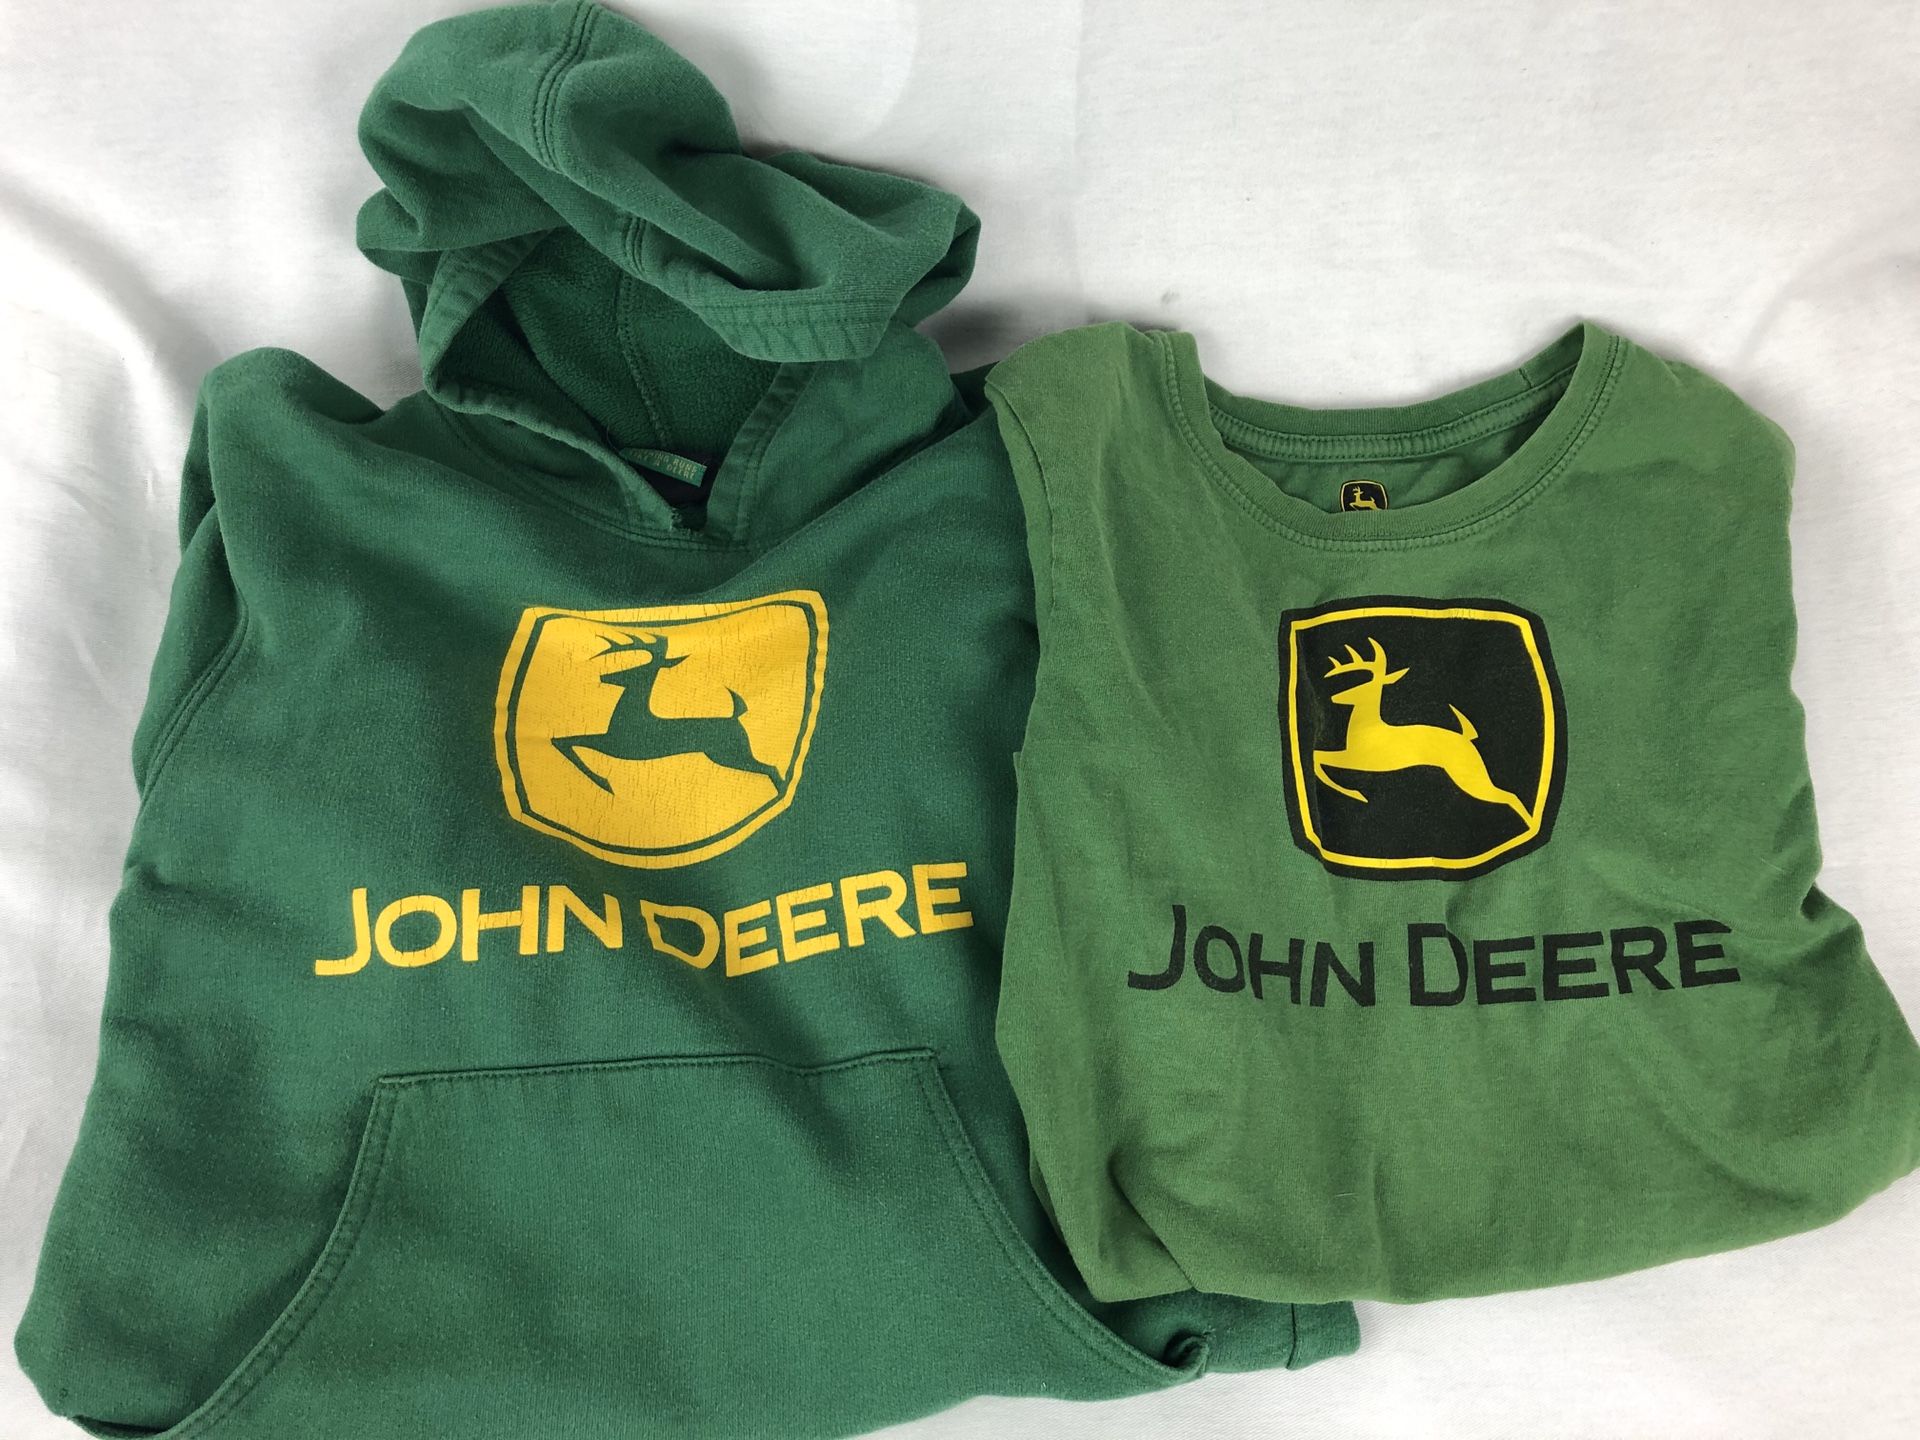 John Deere kids clothes lot - Size 8 - sweatshirt and T-shirt